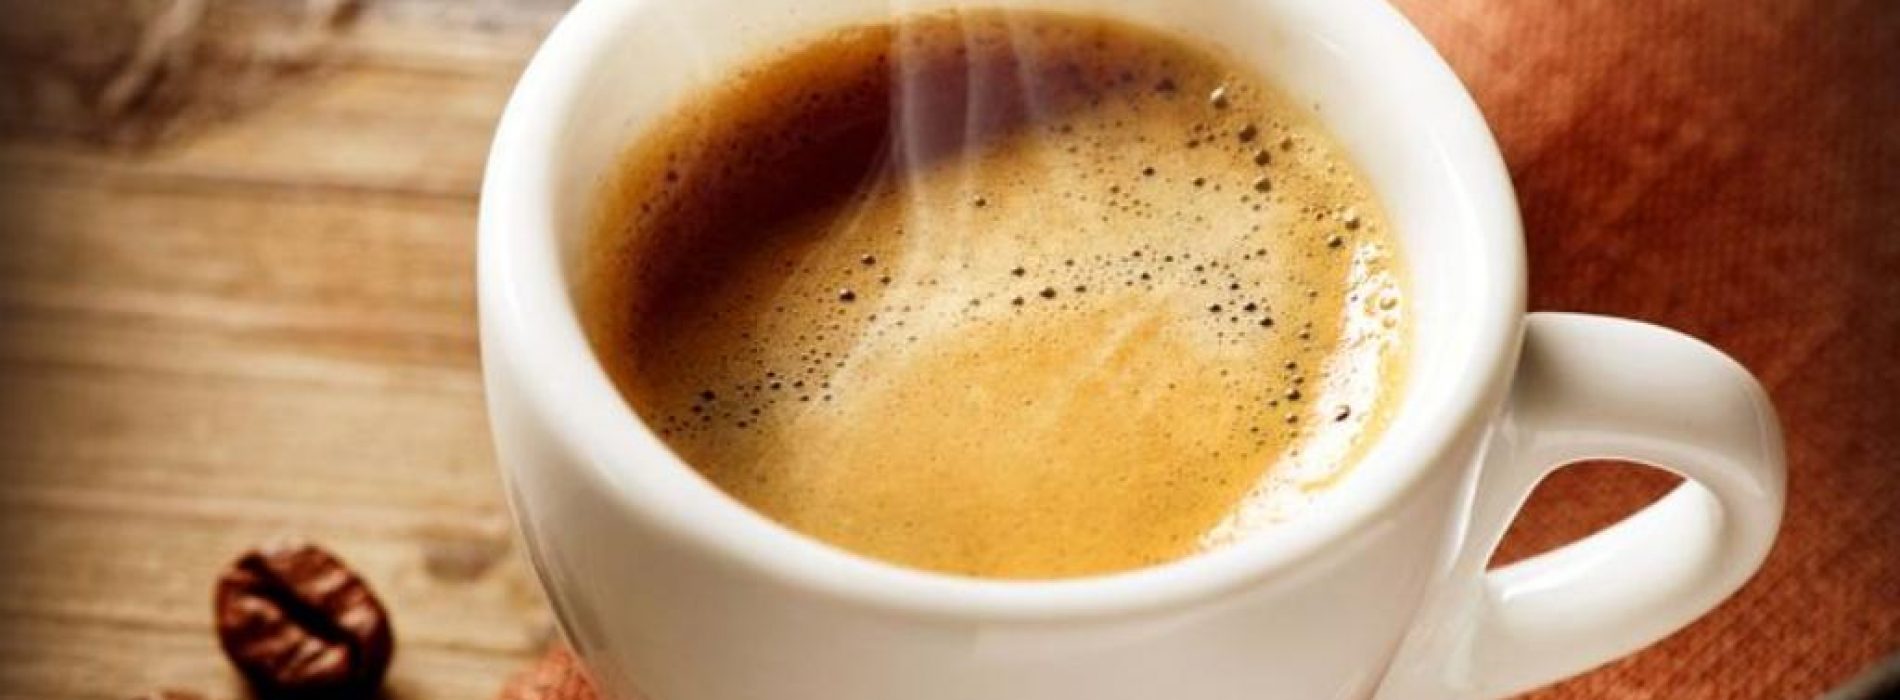 Drie verbazingwekkende gezondheidsvoordelen van koffie